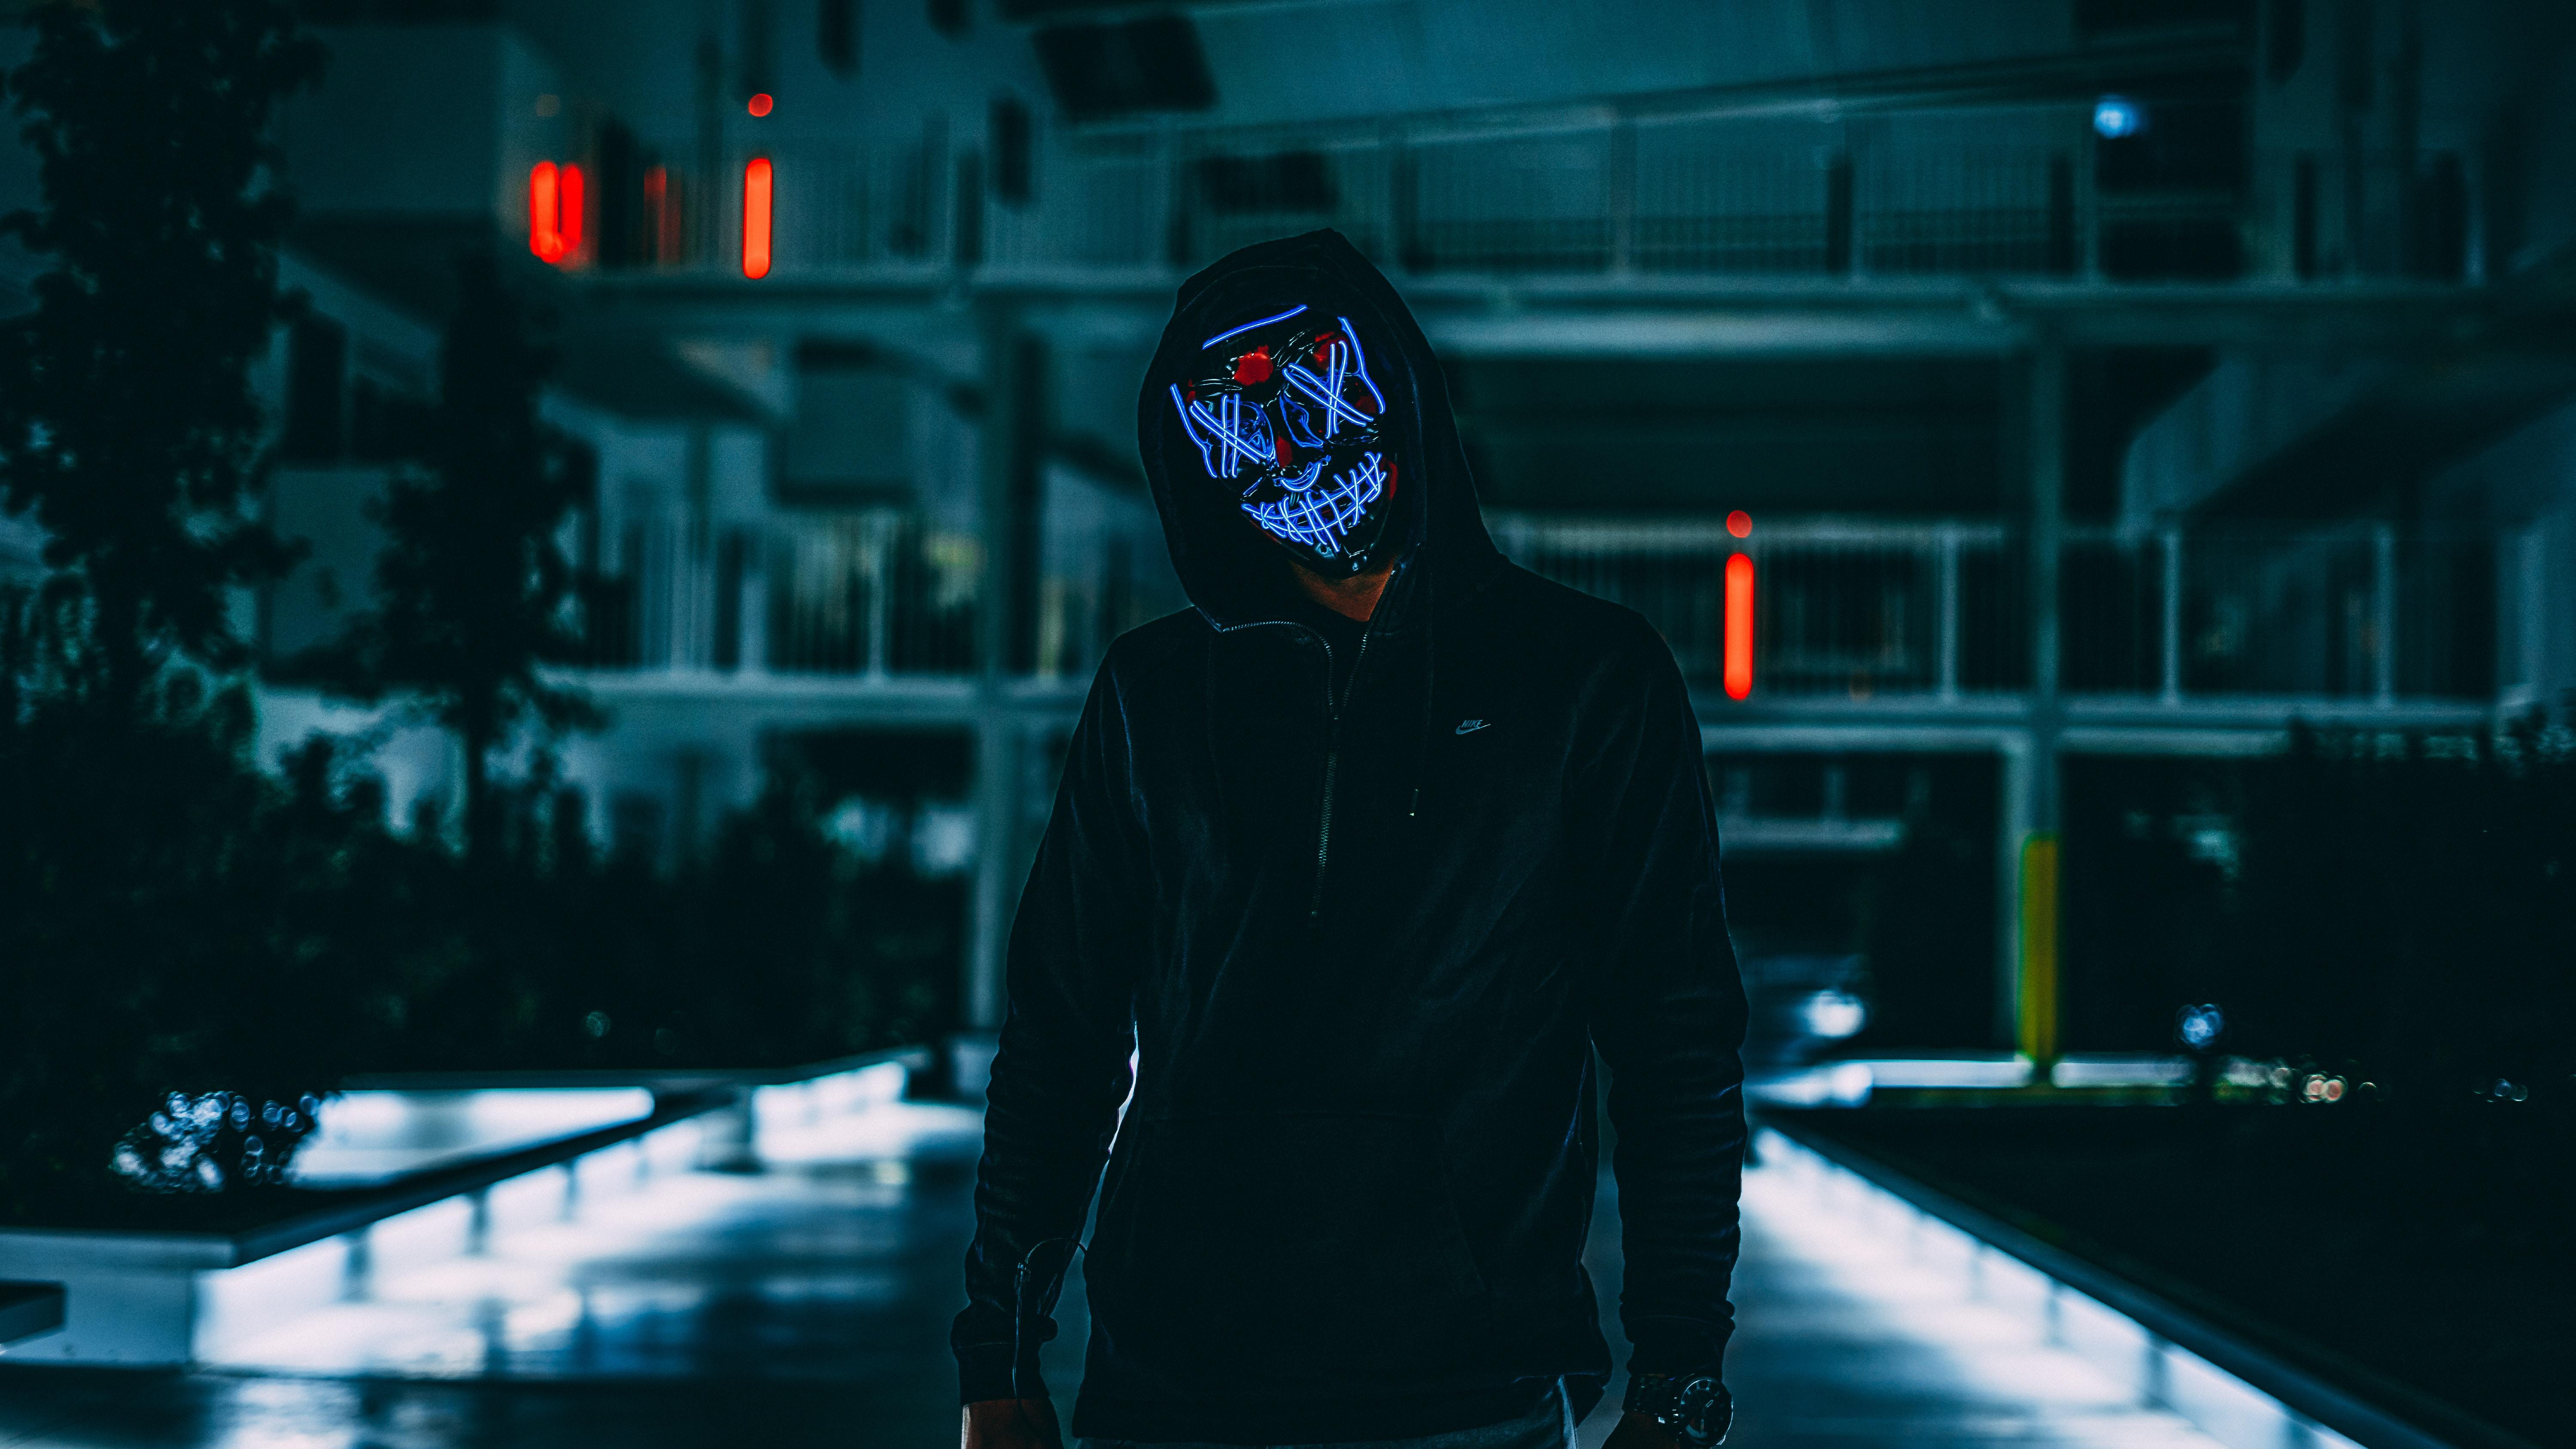 Mask Anonymous Hood 5k, HD Artist, 4k Wallpaper, Image